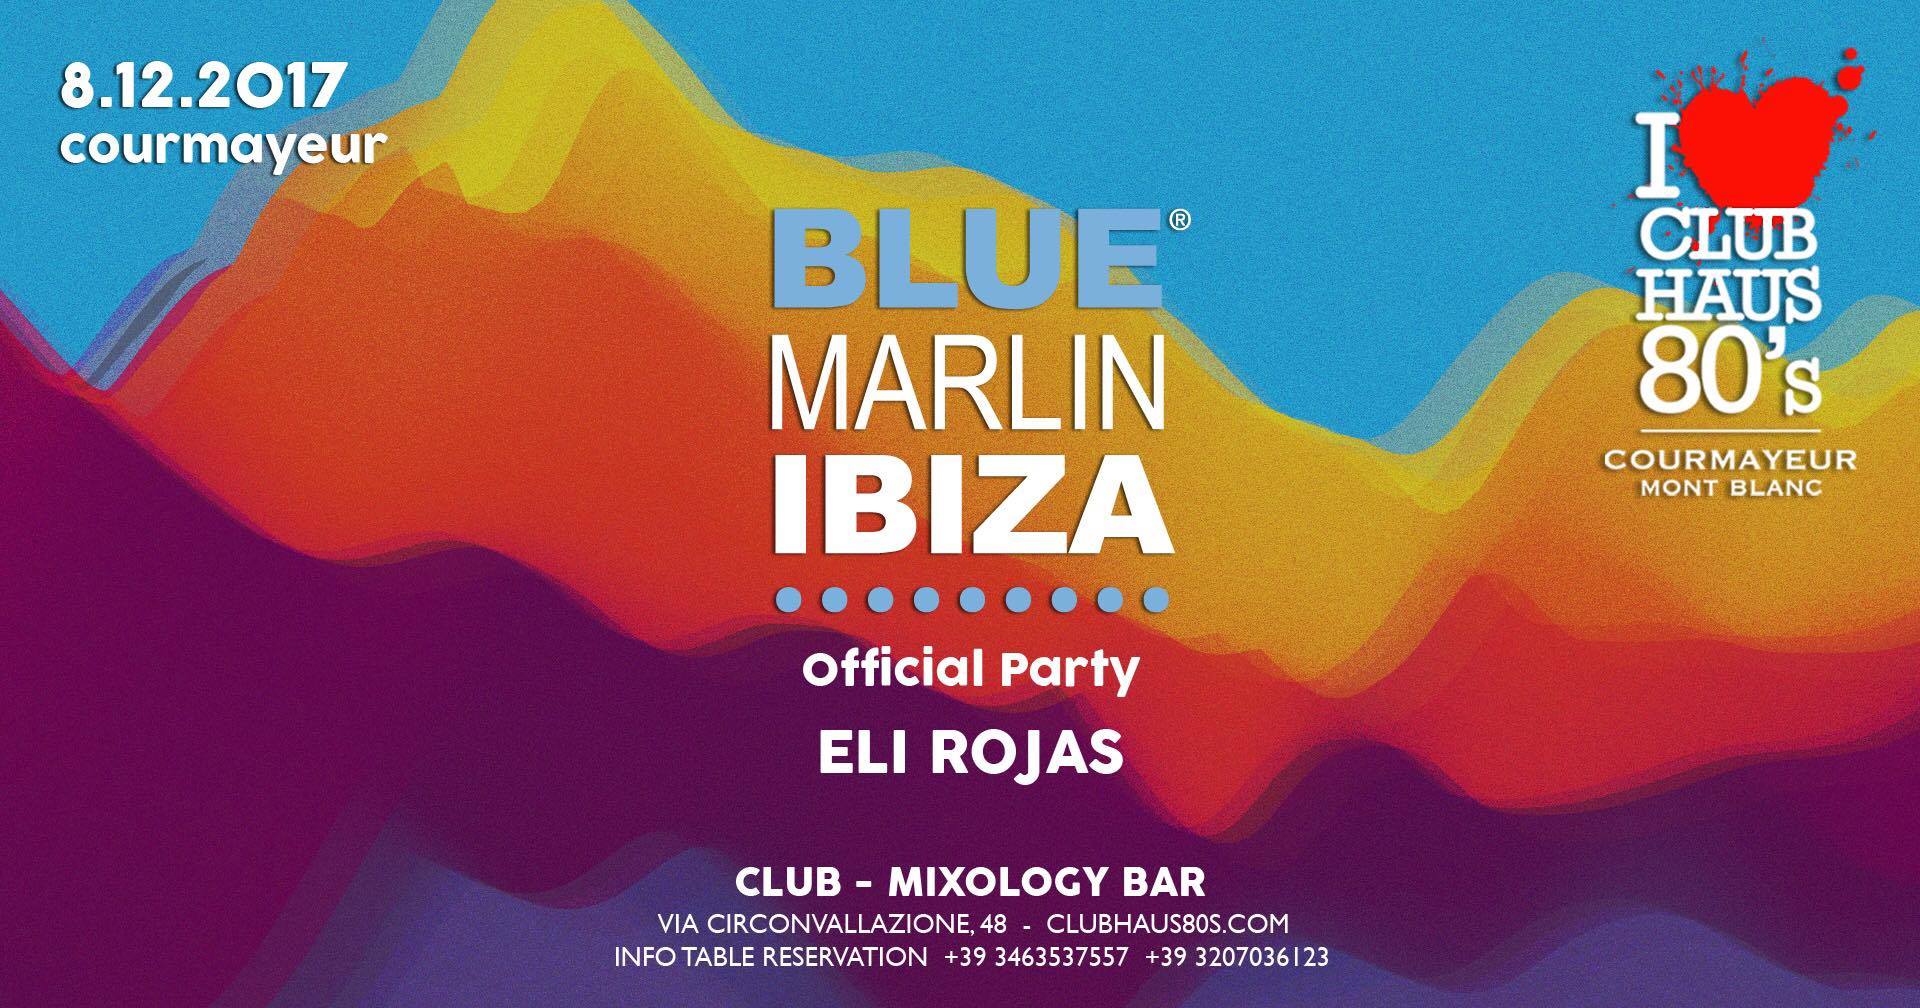 Blue Marlin Ibiza & Club Haus 80’s present Eli Rojas in Courmayeur ...